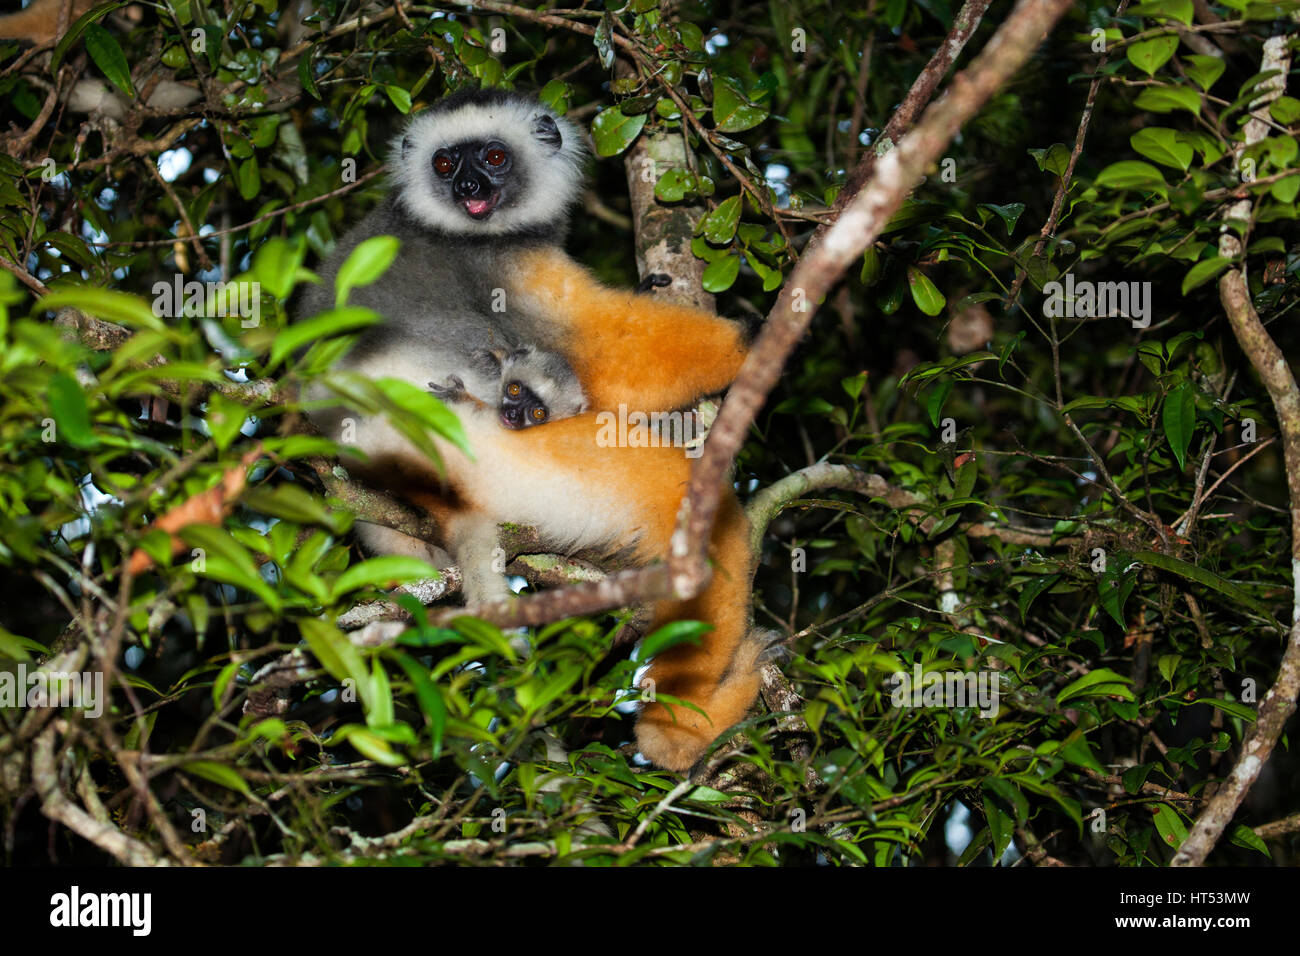 Lemur Diademed Sifaka (mother with young), Propithecus diadema, Andasibe – Mantadia National Park, Madagascar, by Monika Hrdinova/Dembinsky Photo Asso Stock Photo